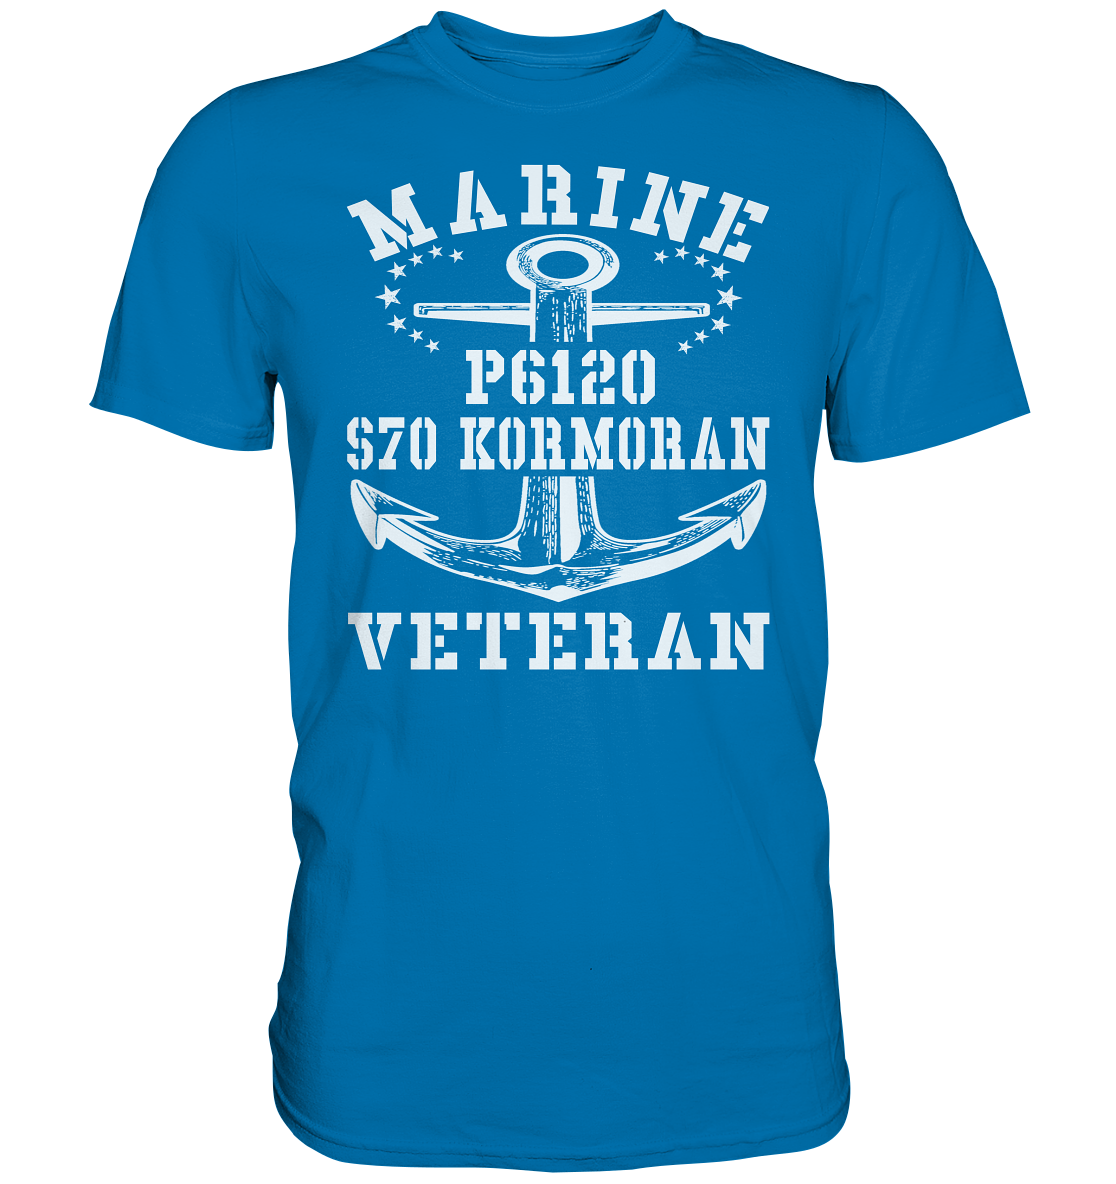 FK-Schnellboot P6120 KORMORAN Marine Veteran  - Premium Shirt